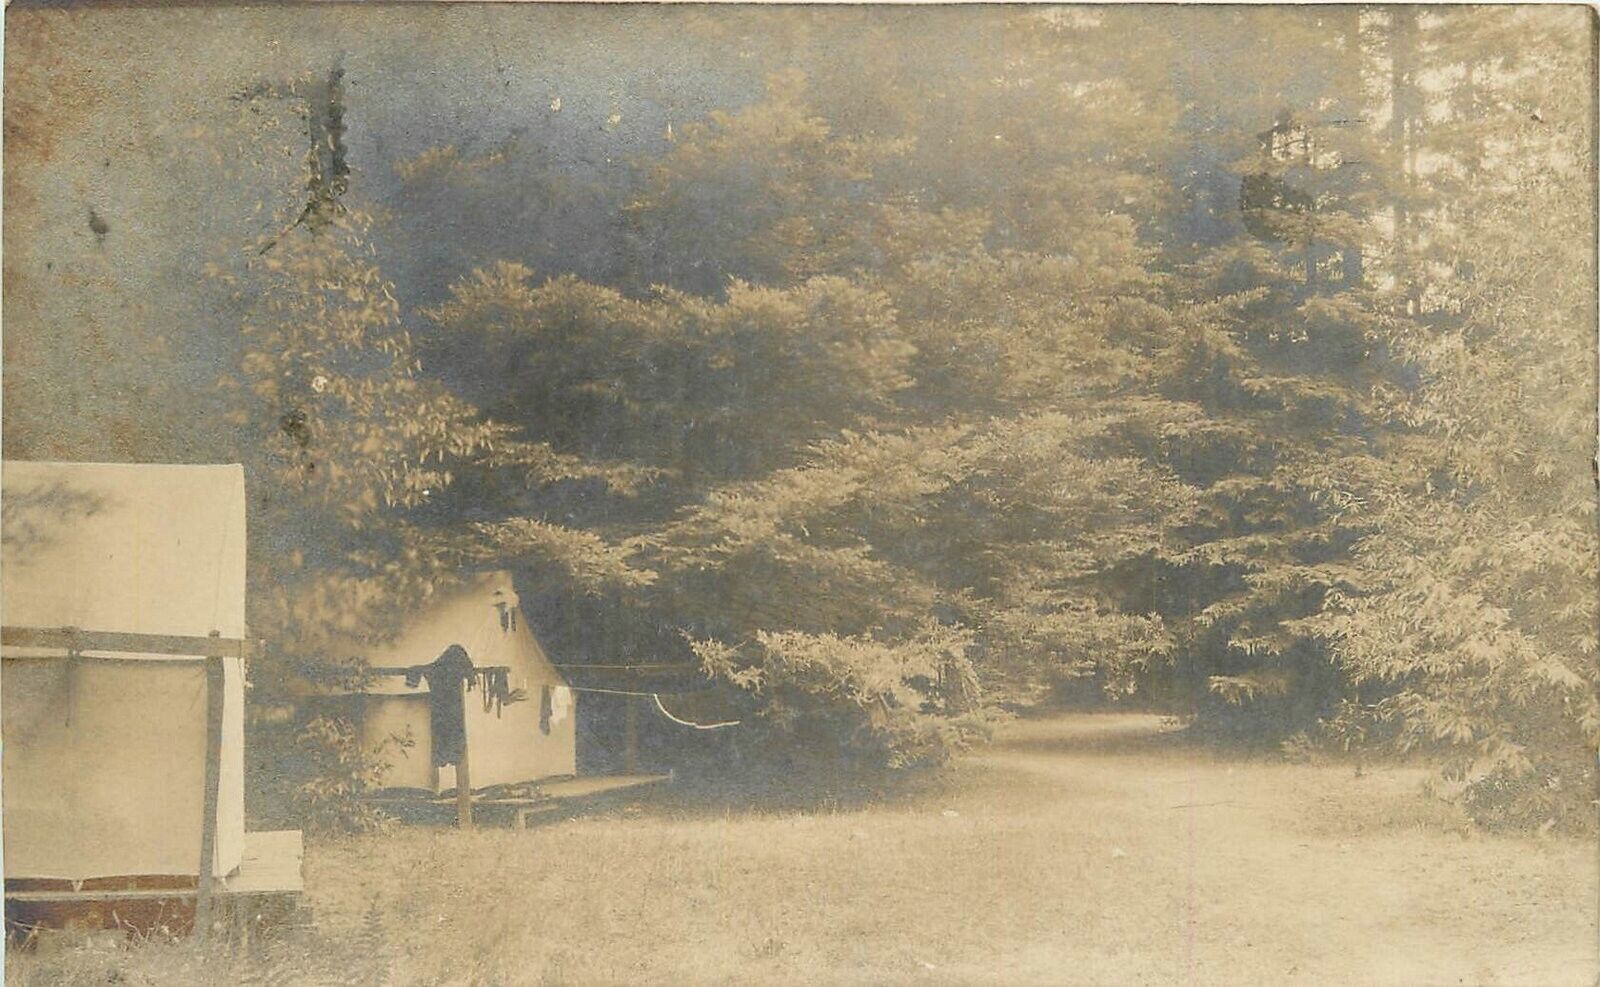 Postcard RPPC 1908 California Guerneville Sonoma forest camp 23-13169